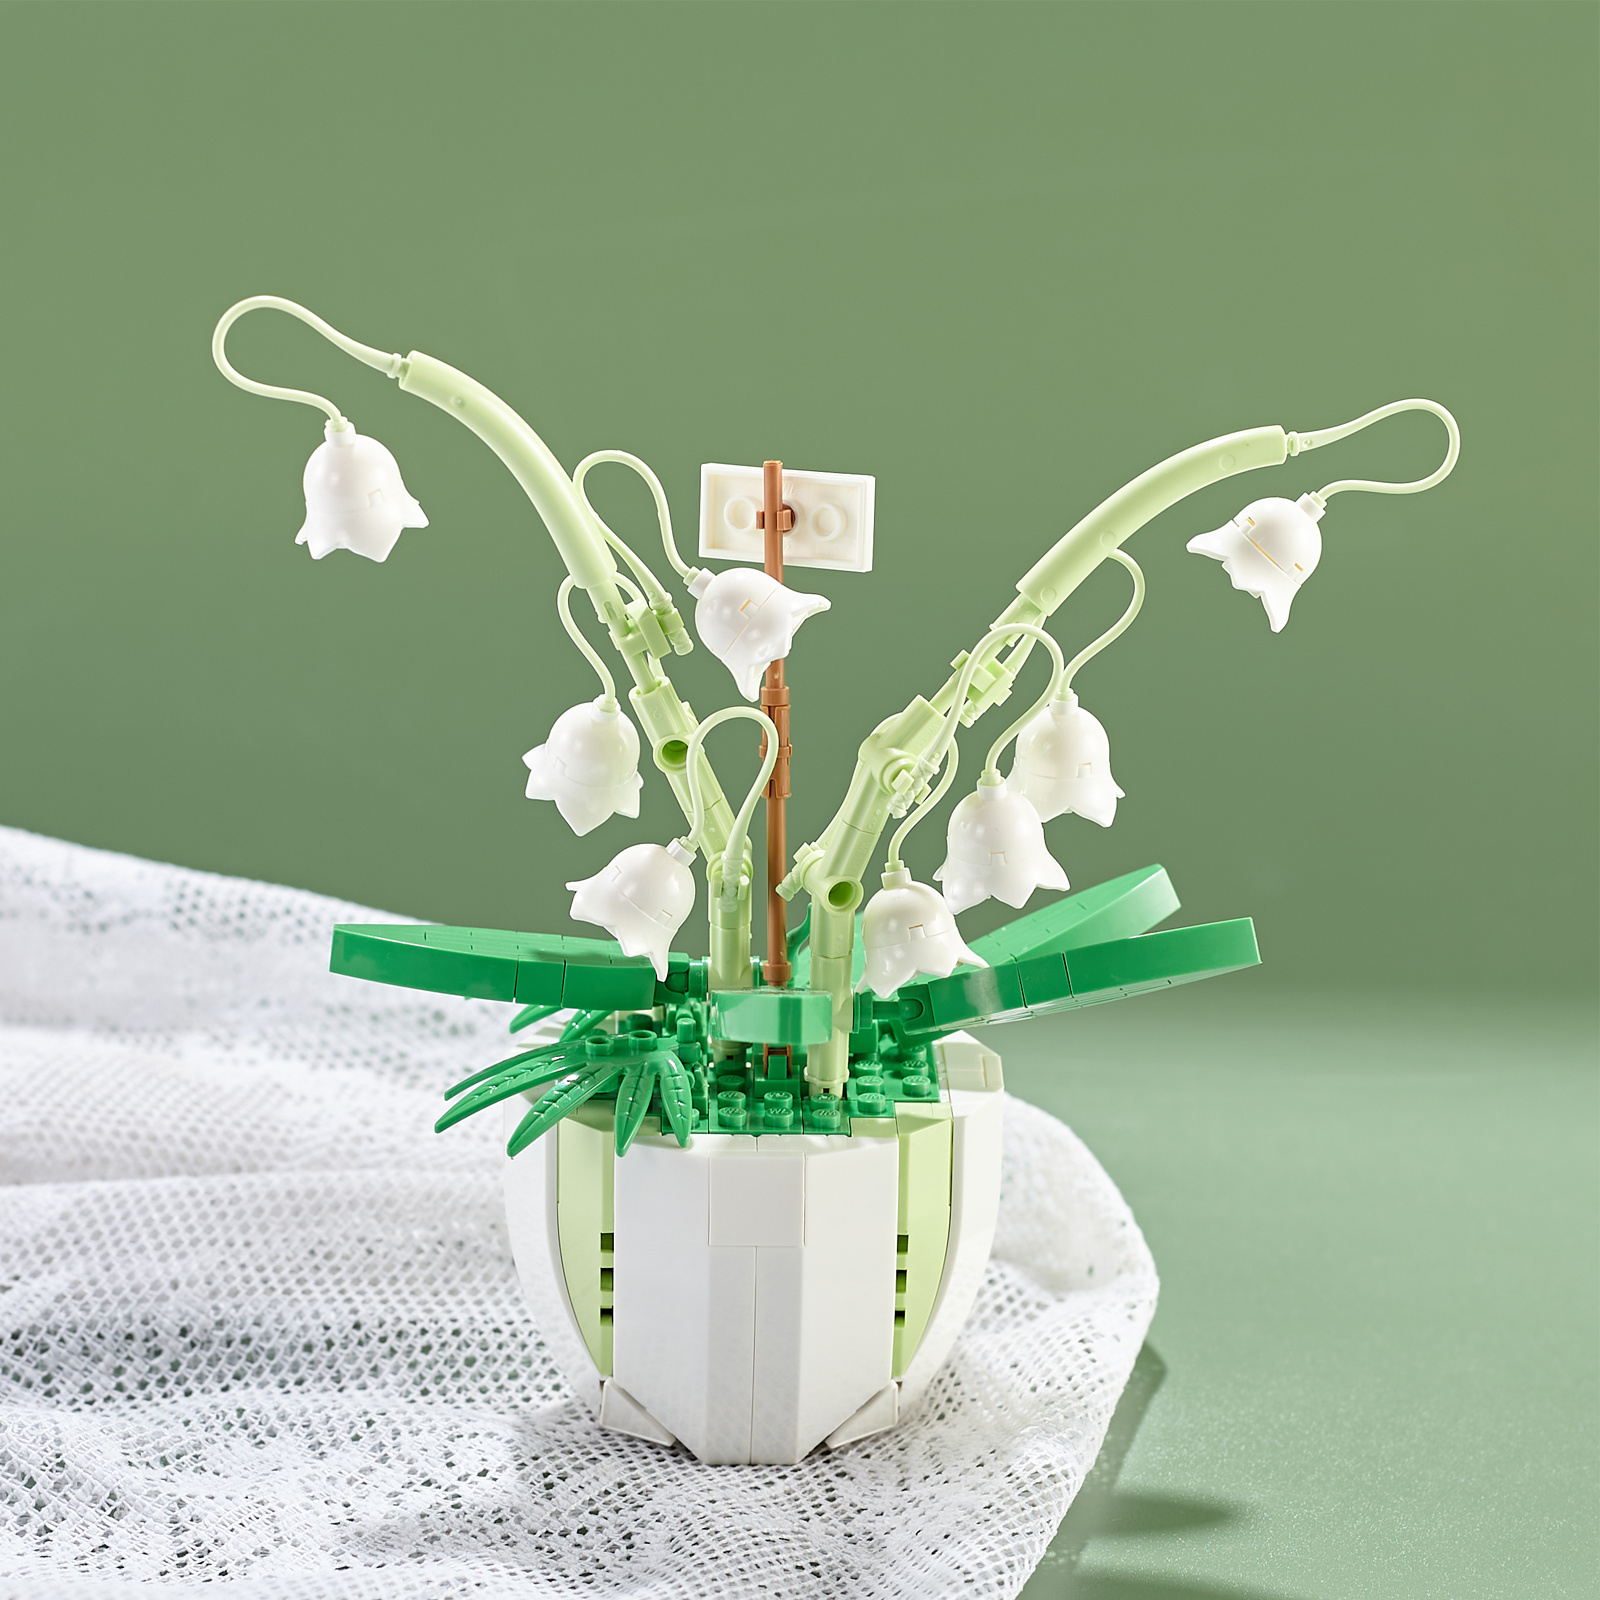 Build * with this Creative Convallaria * Flower Building Block Kit!